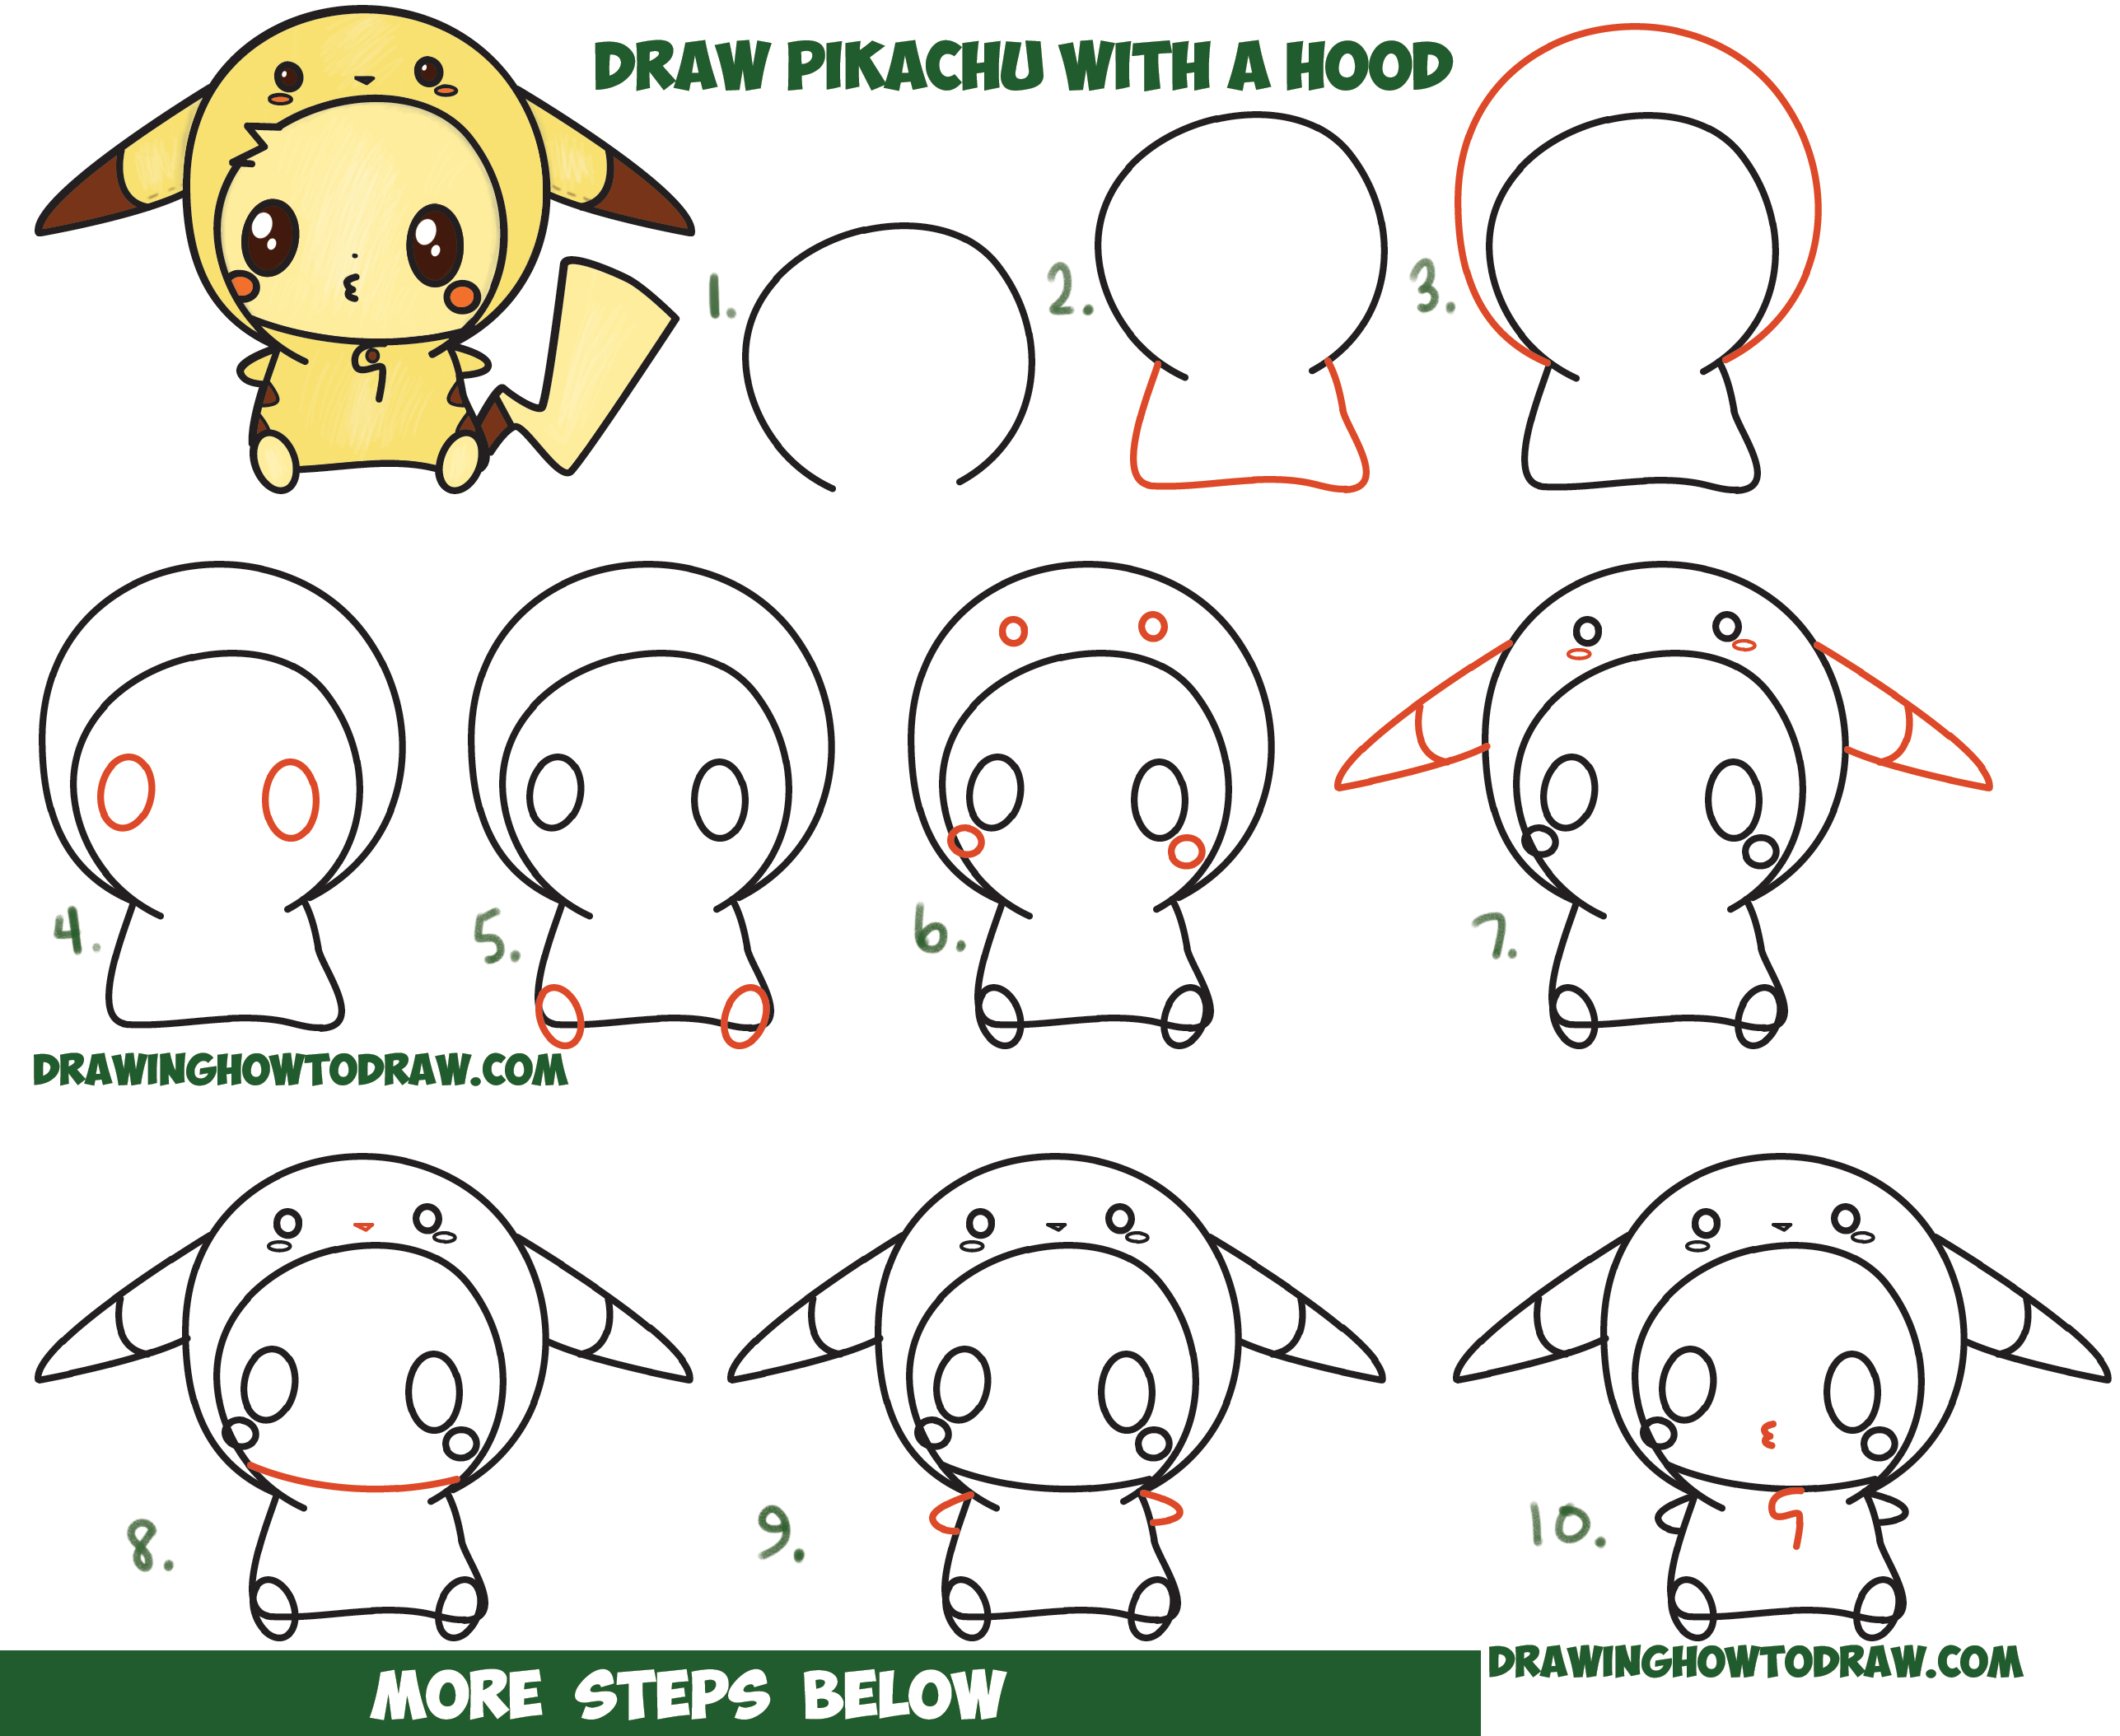 ArtStation - Pikachu drawing